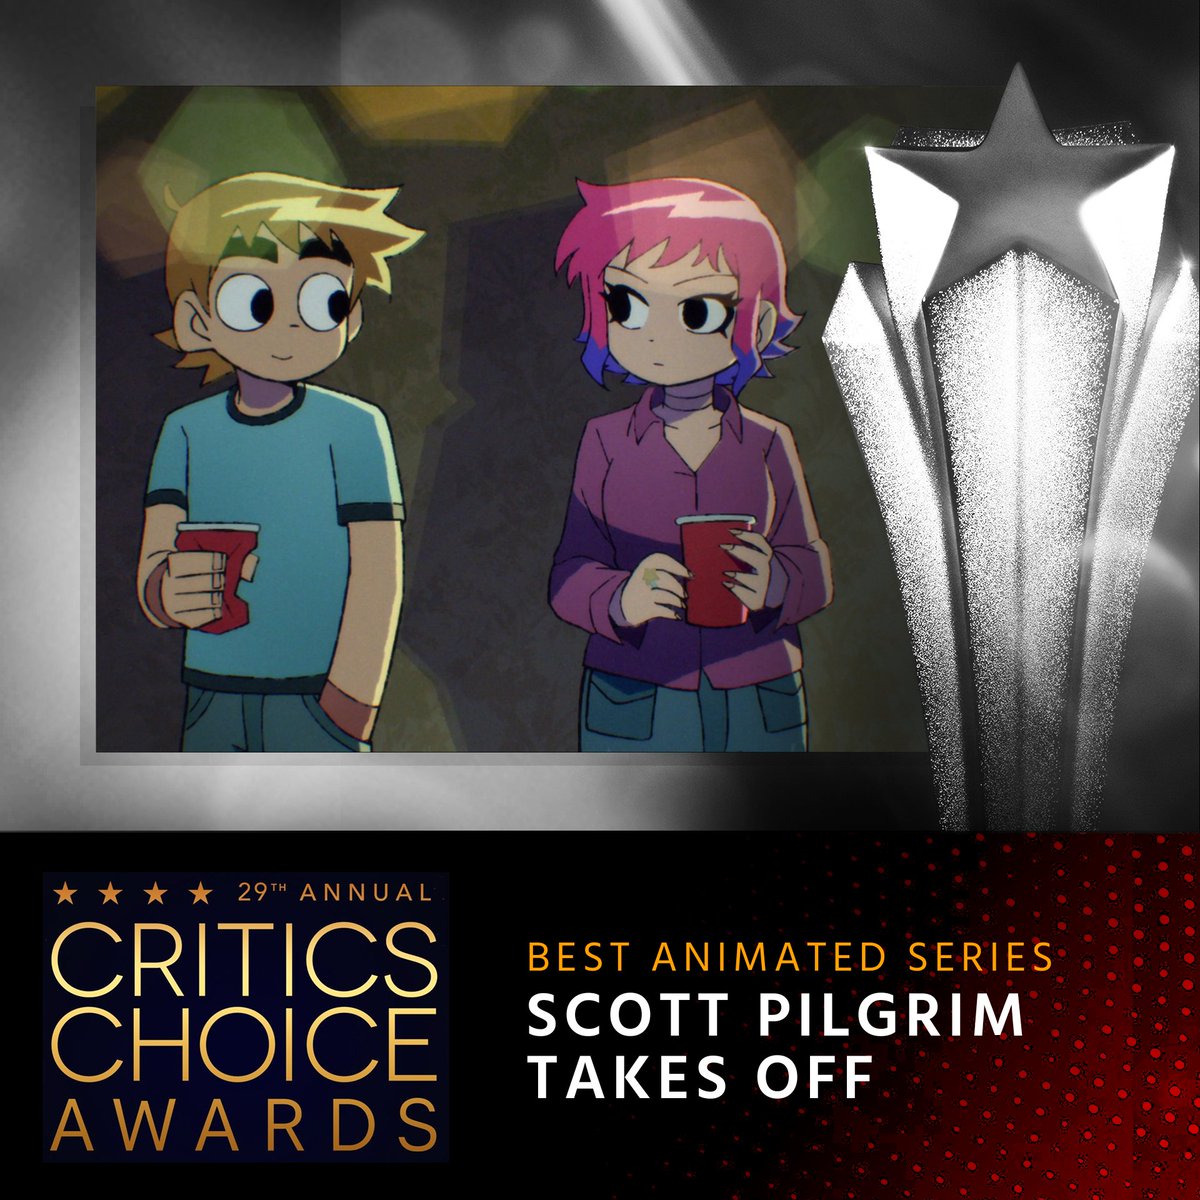 Congratulations to “Scott Pilgrim Takes Off”⭐️ The show has won the #CriticsChoice Award for BEST ANIMATED SERIES! #CriticsChoiceAwards #ScottPilgrim